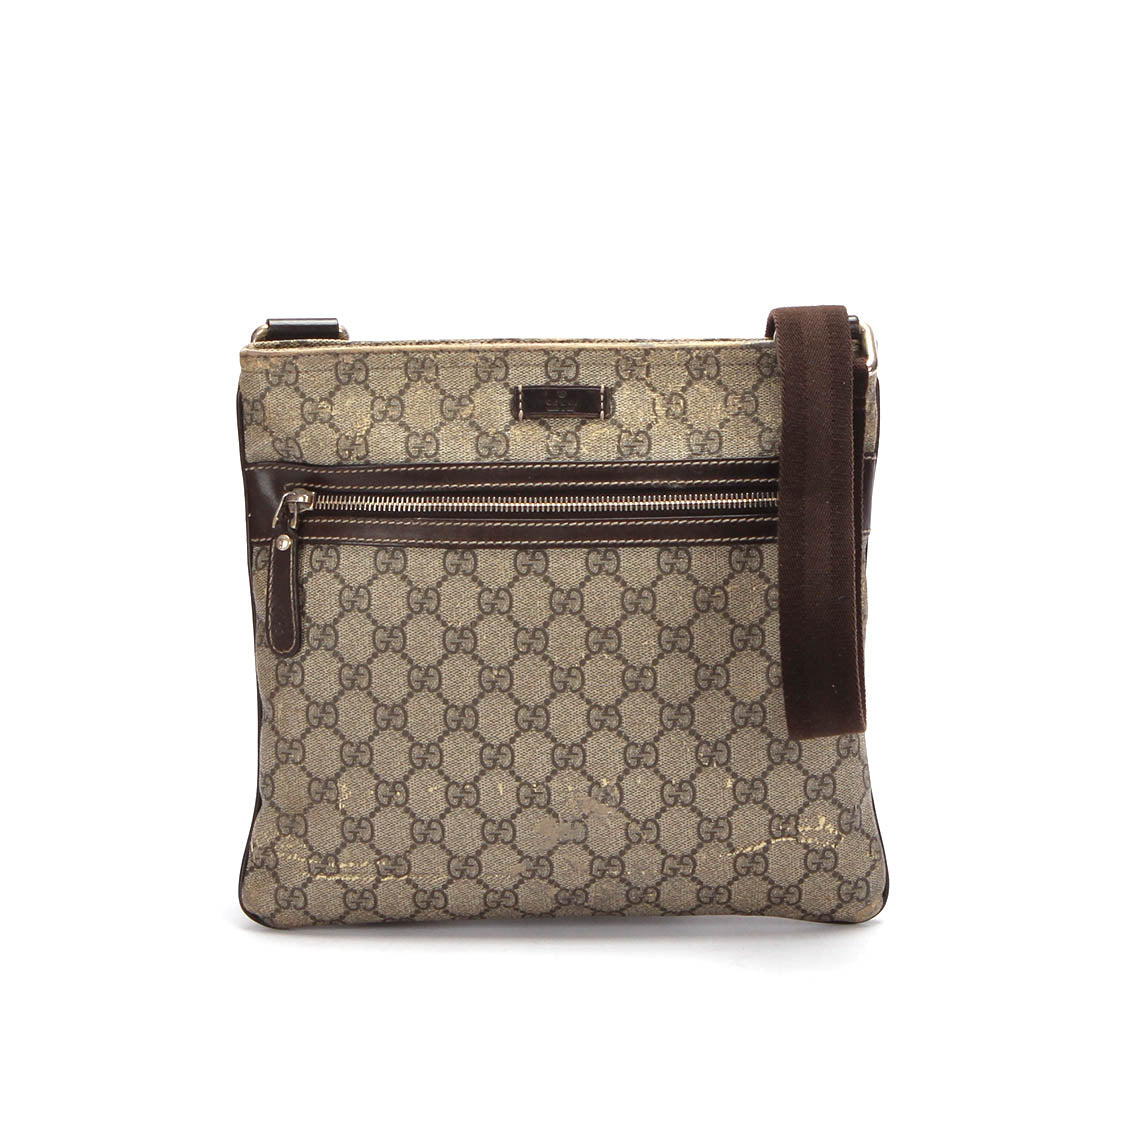 Gucci GG Supreme Flat Messenger Bag Canvas Crossbody Bag 295257 in Fair condition